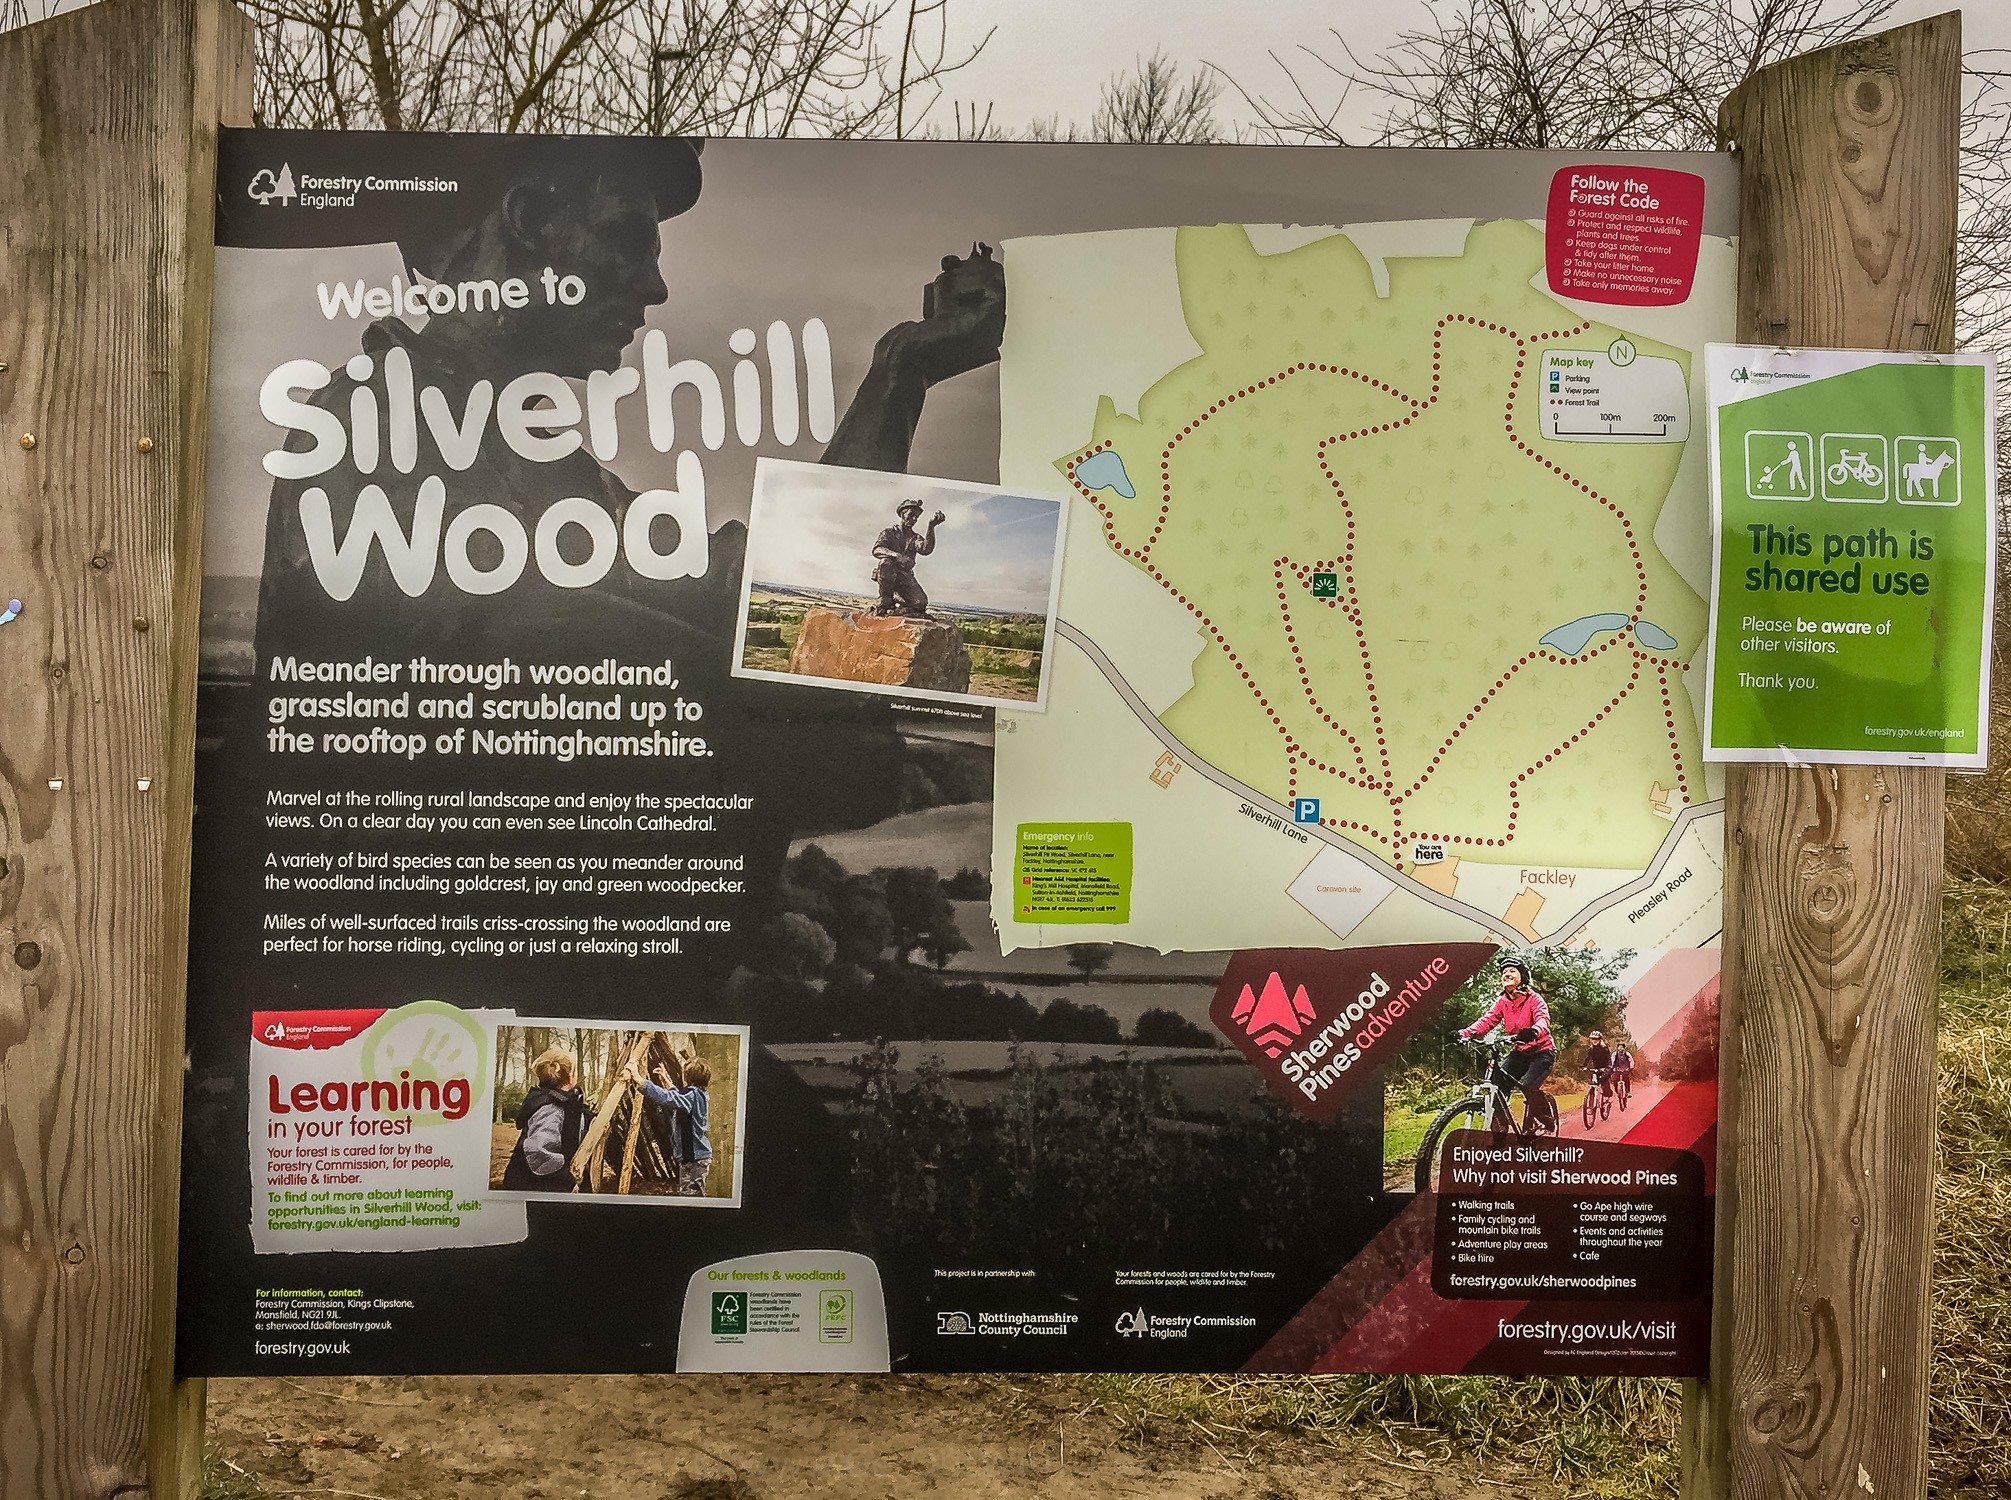 Silverhill Wood